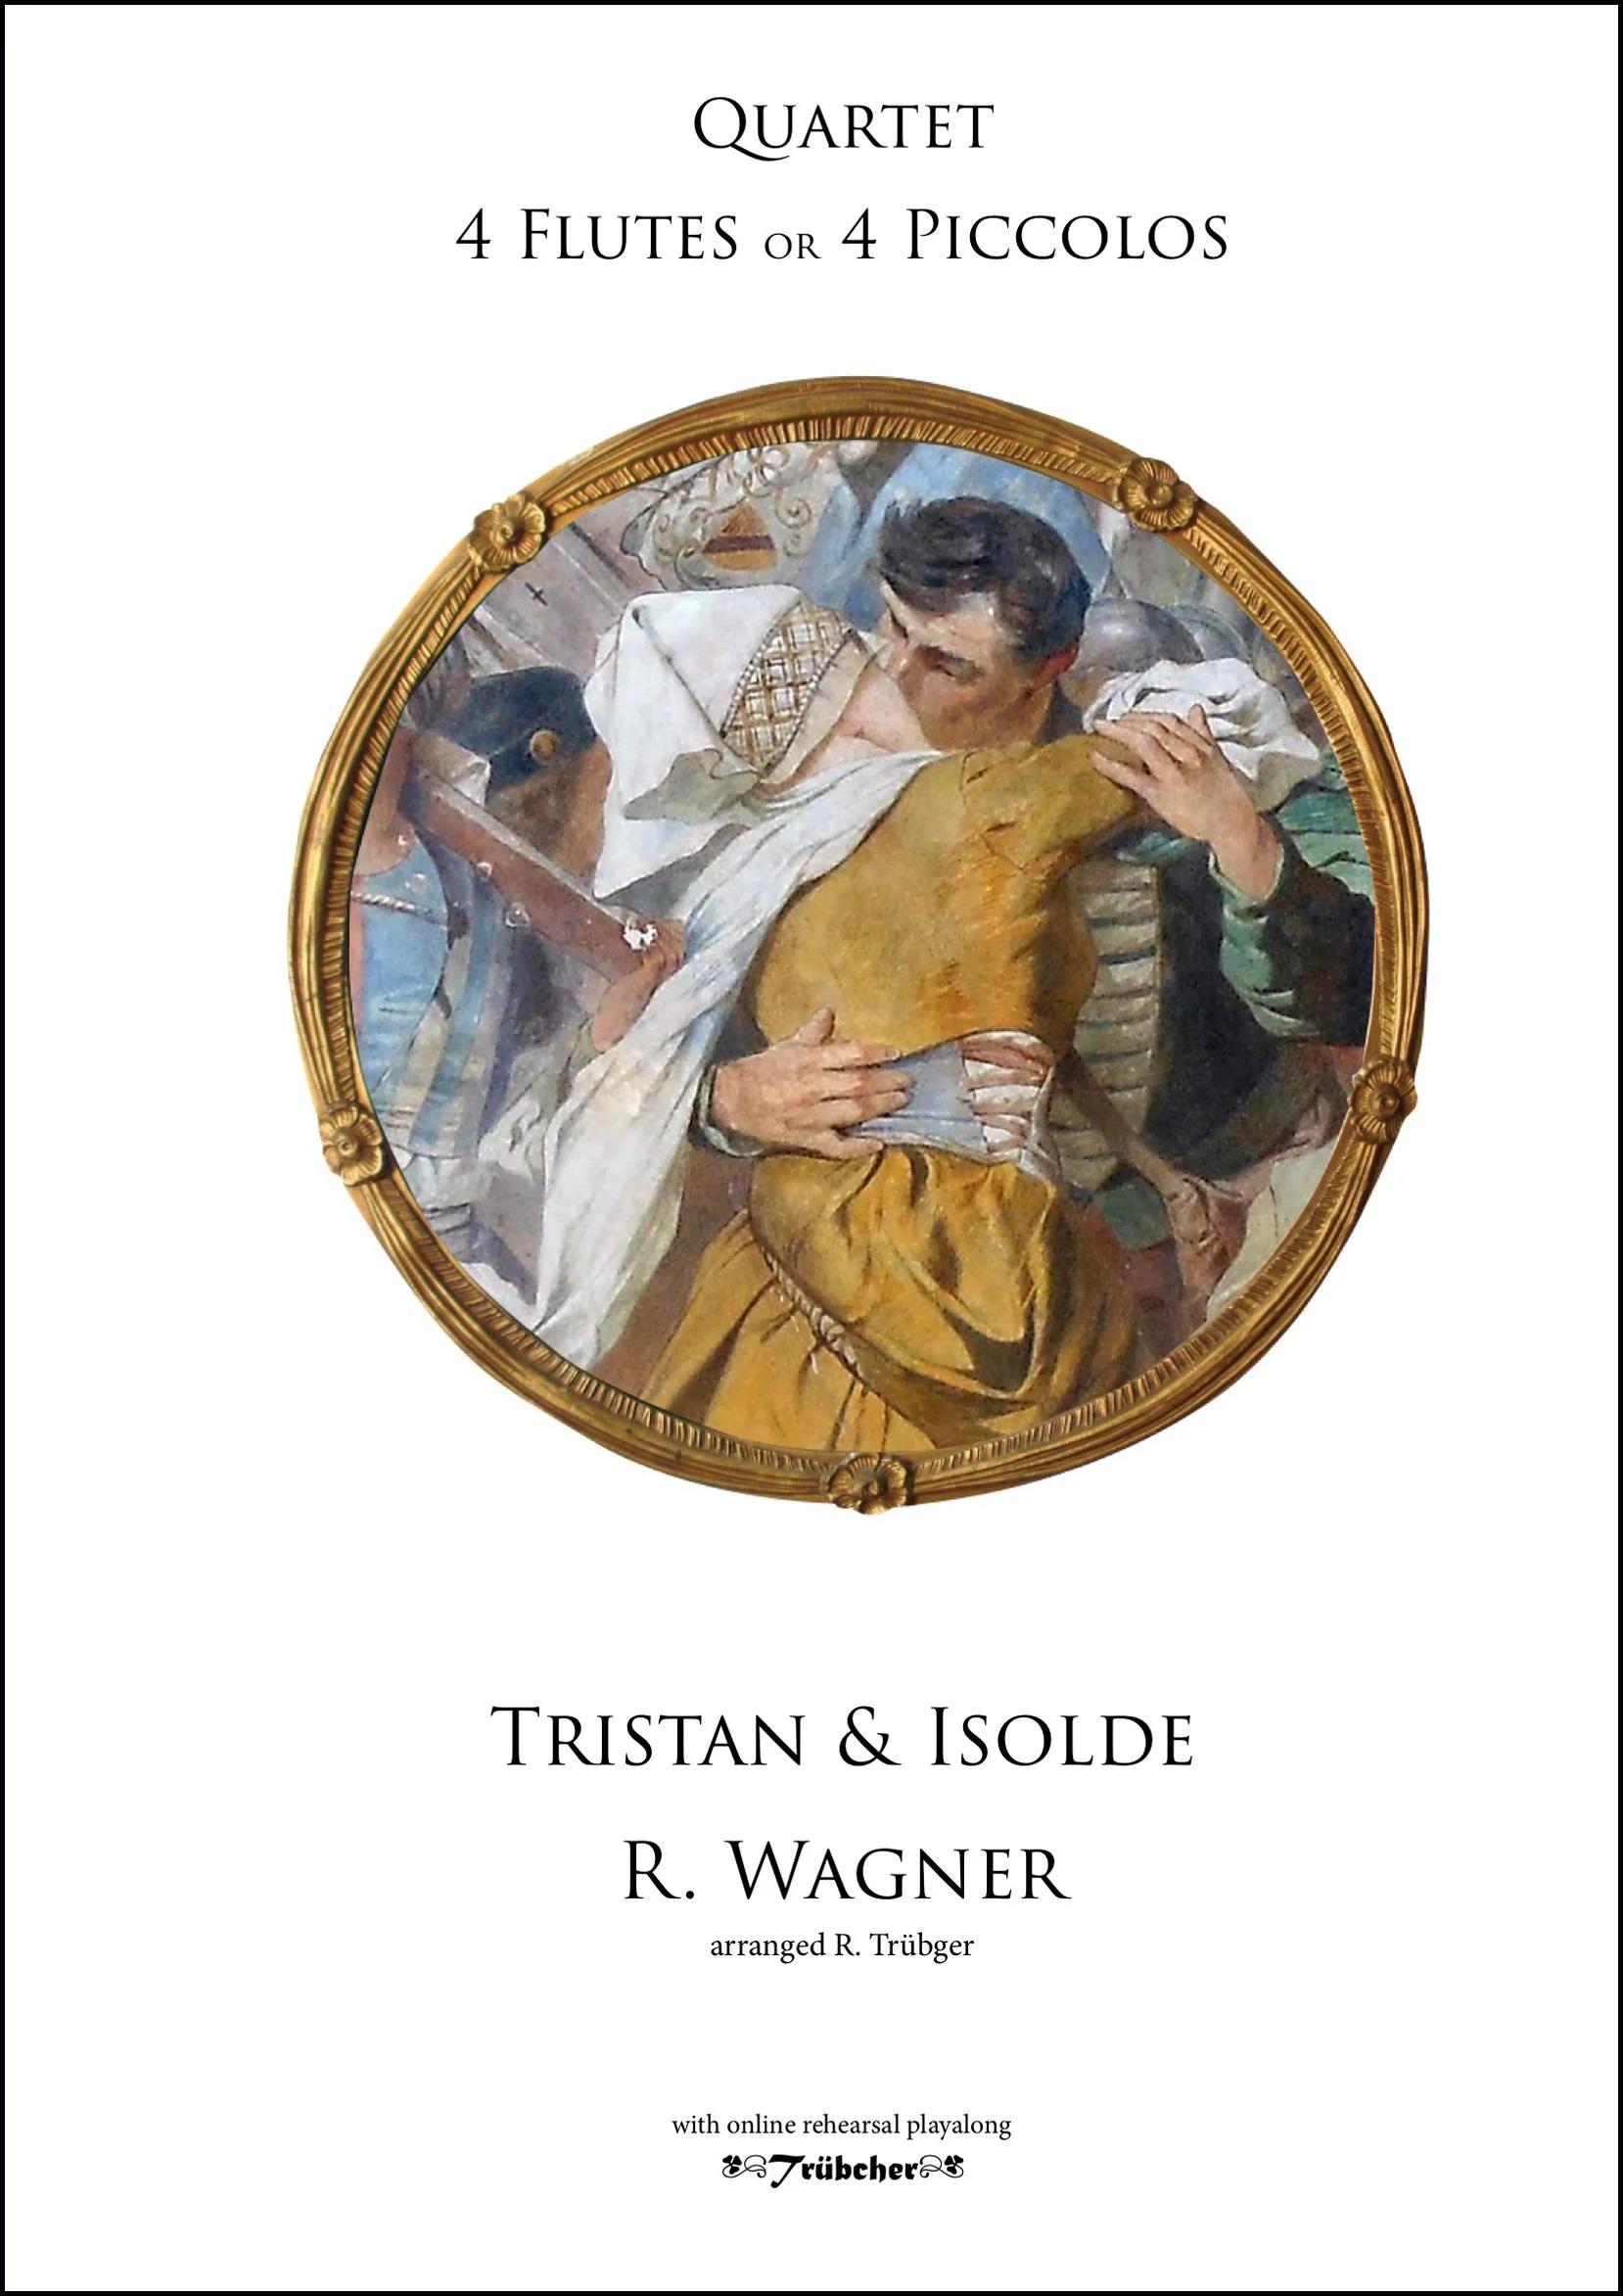 Tristan & Isolde prelude arr. 4 piccolos (or 4 flutes) - R.Wagner | Suono Flauti